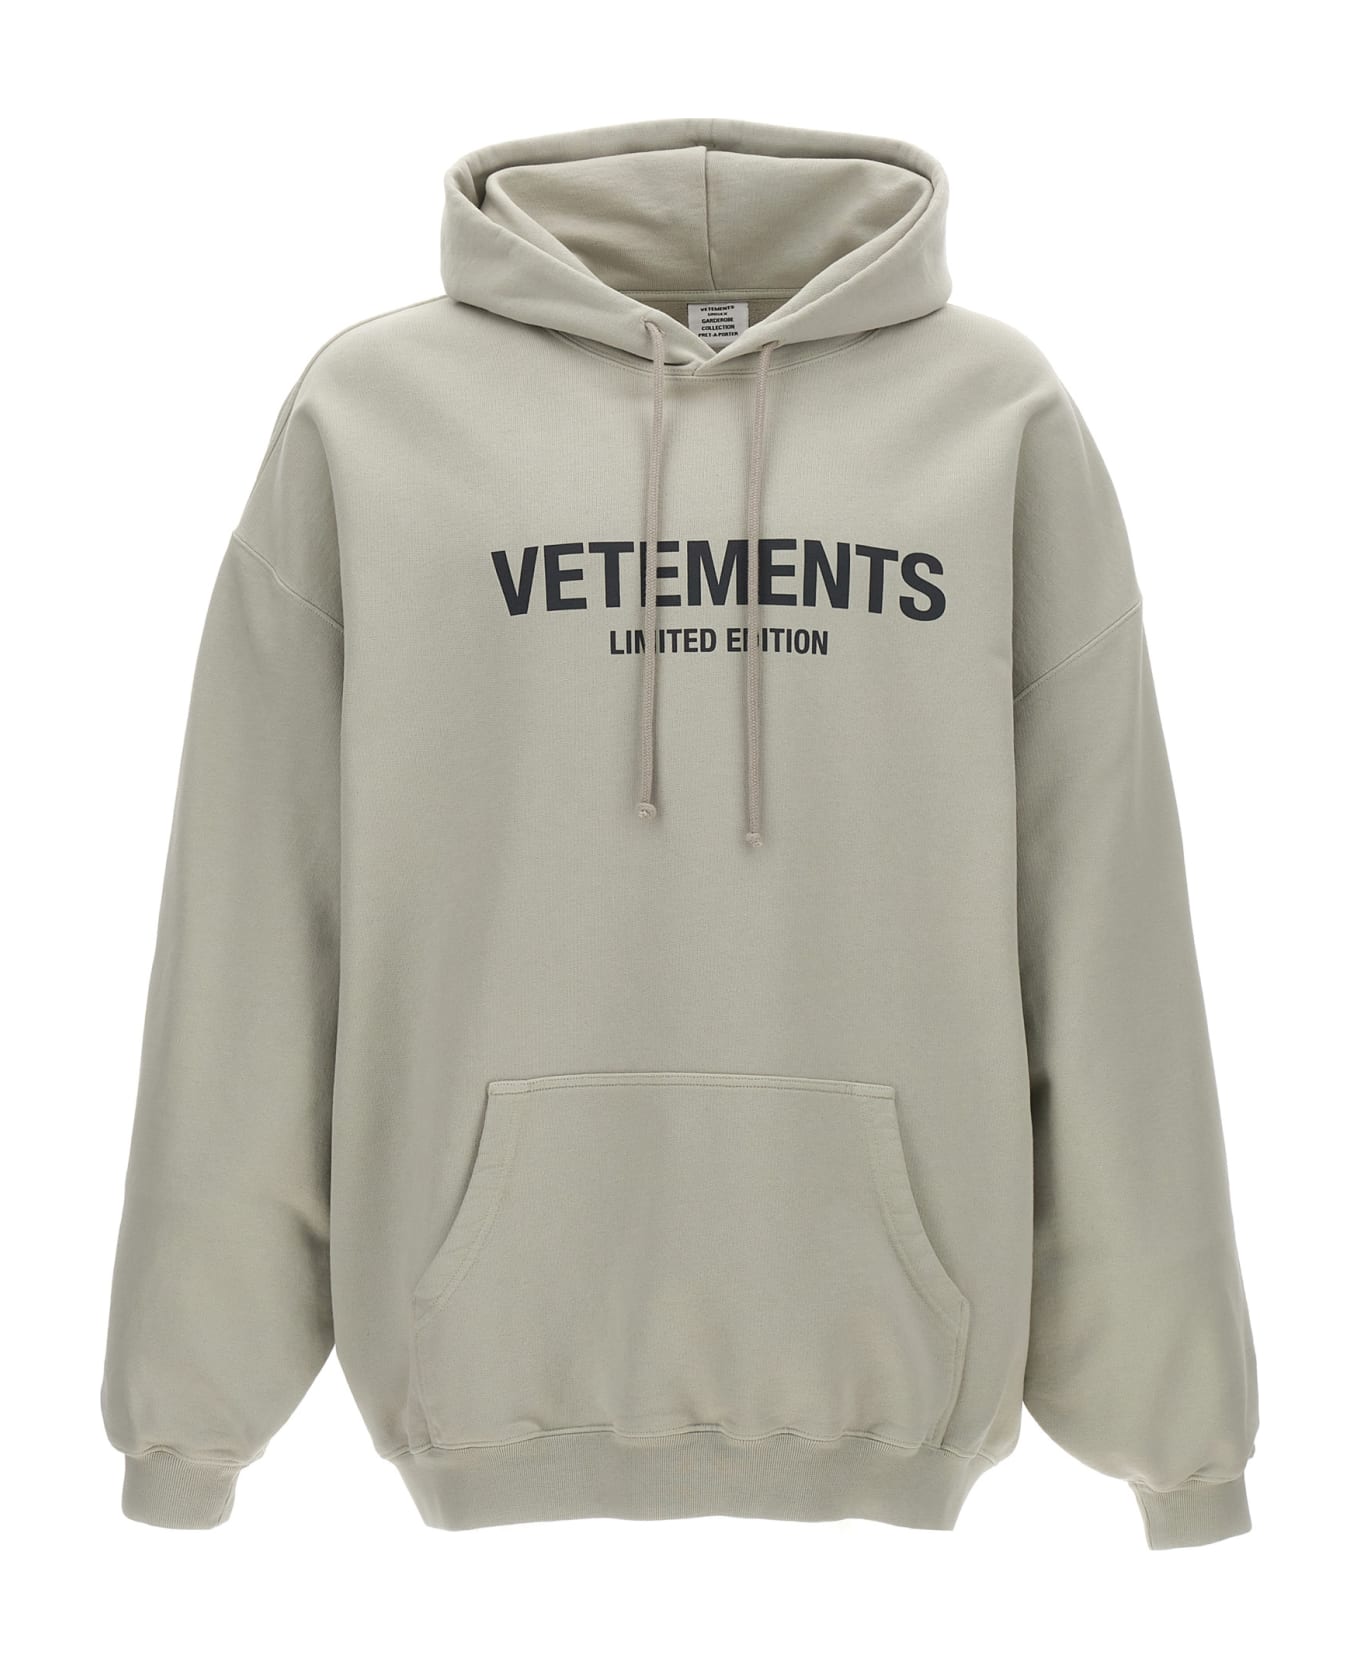 VETEMENTS 'limited Edition Logo' Hoodie - Gray フリース